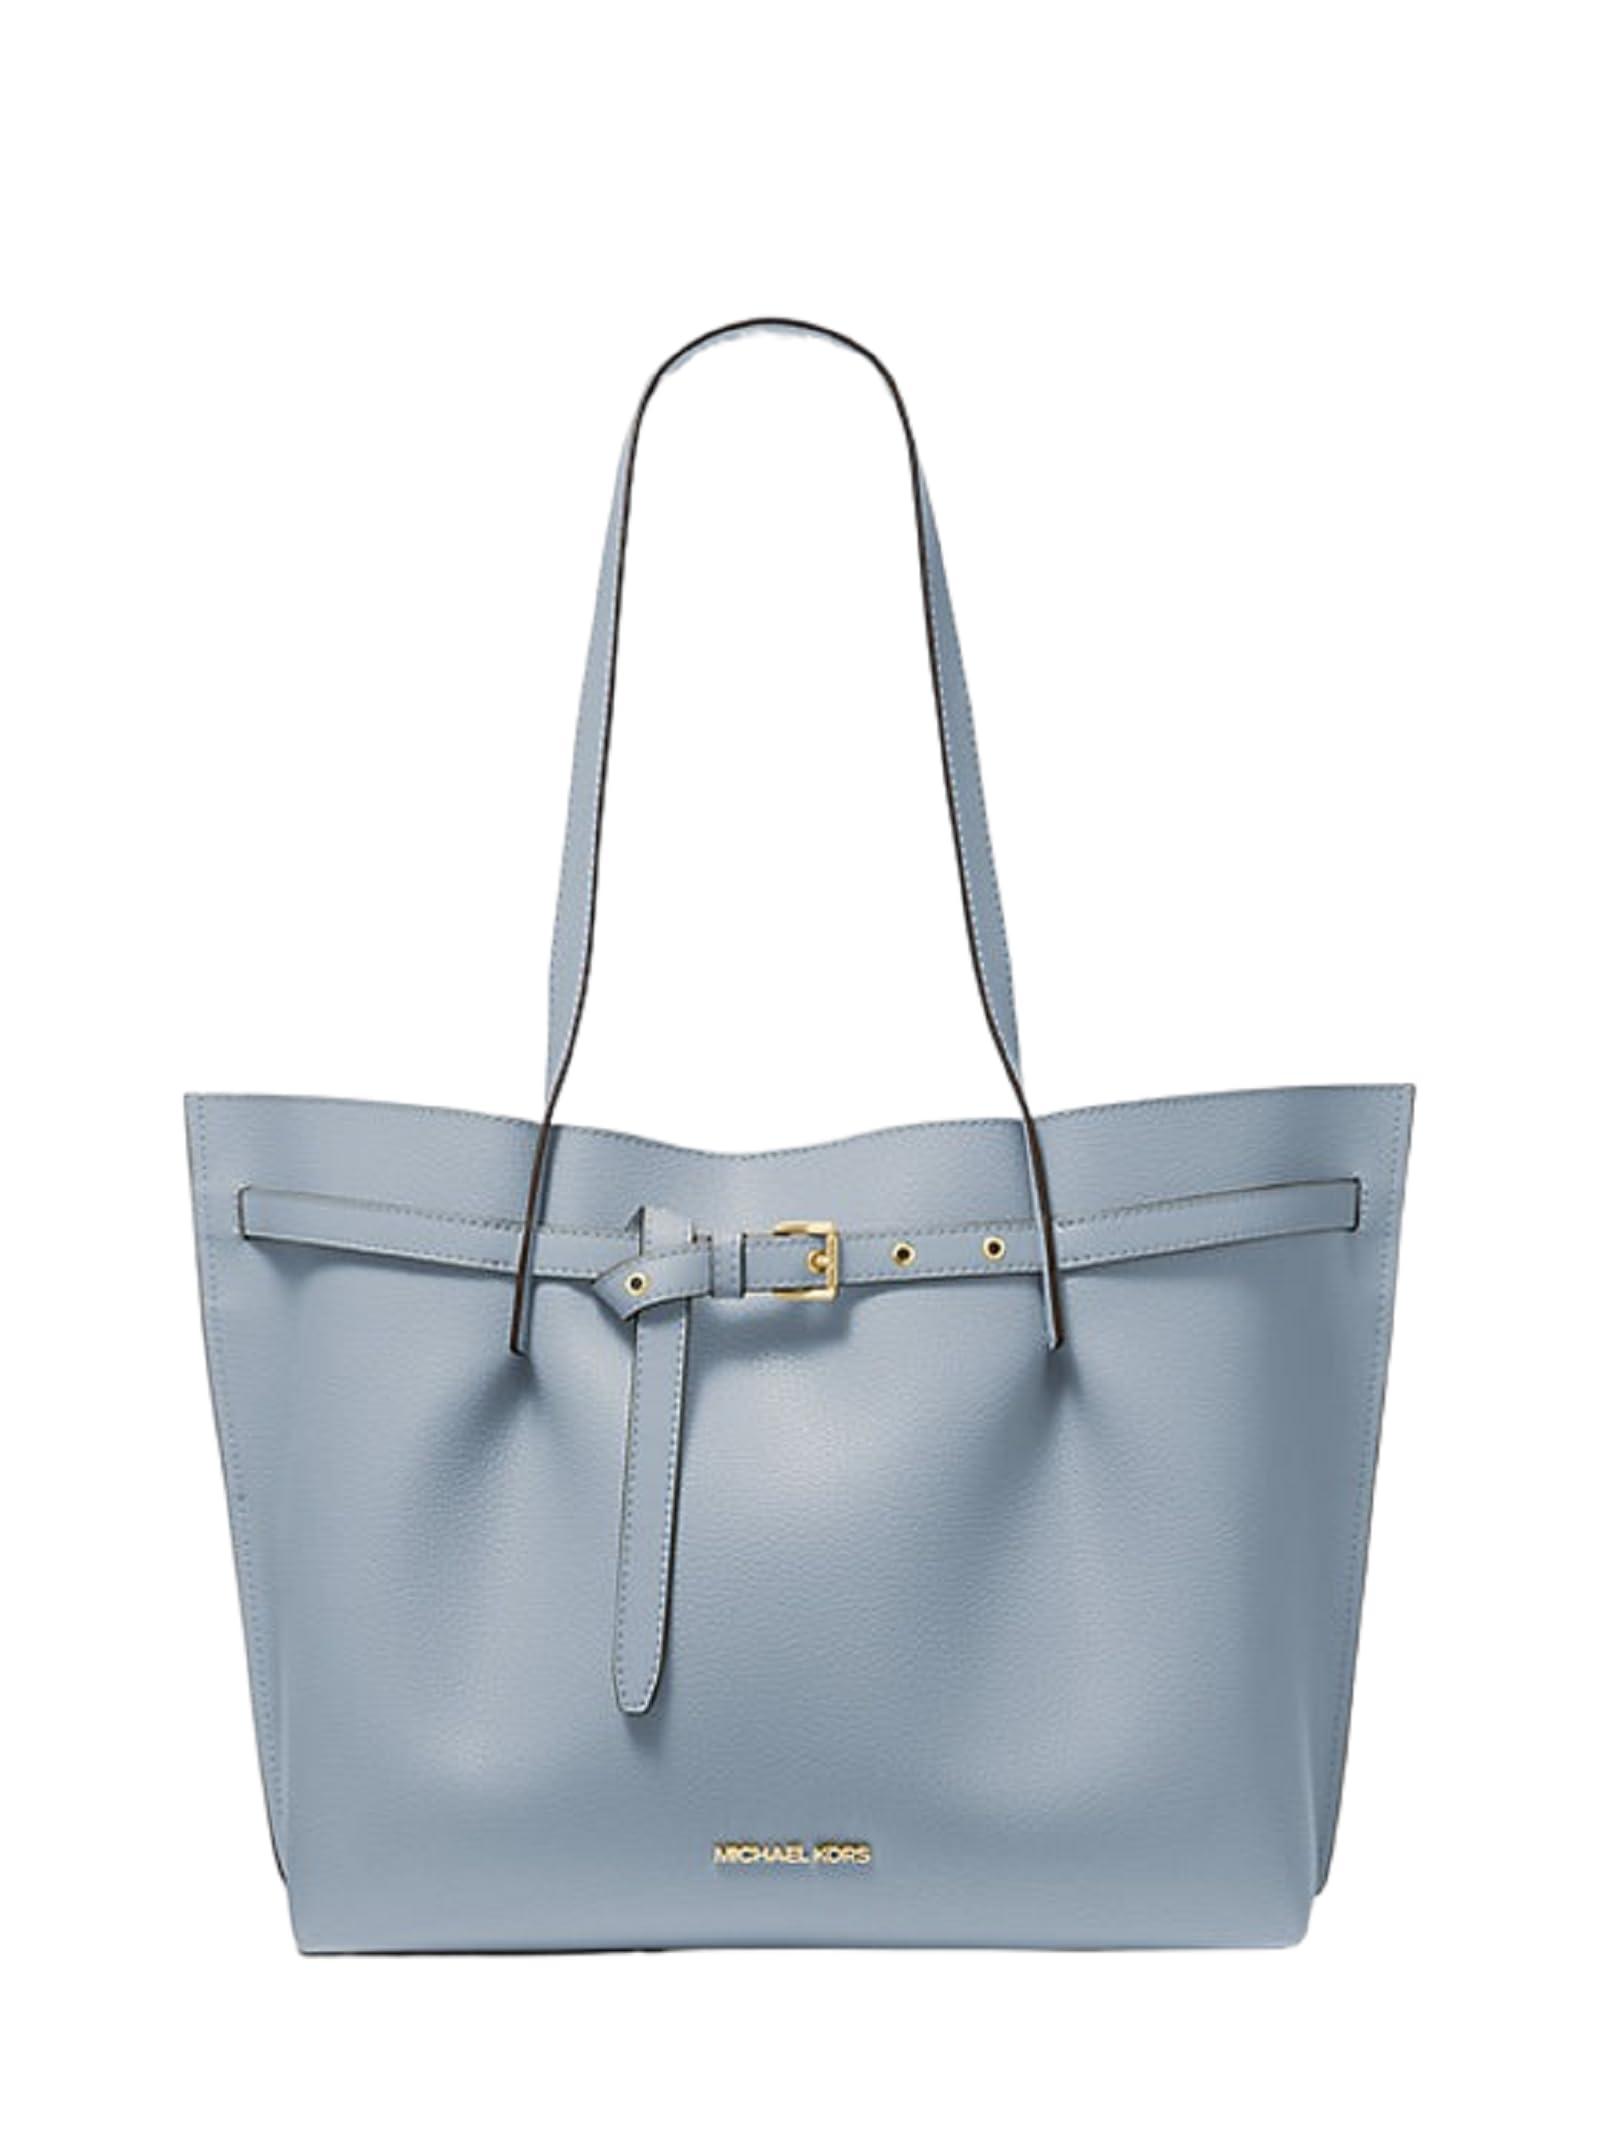 Michael Kors Emilia Large Leather Tote Bag in Blue | Lyst UK